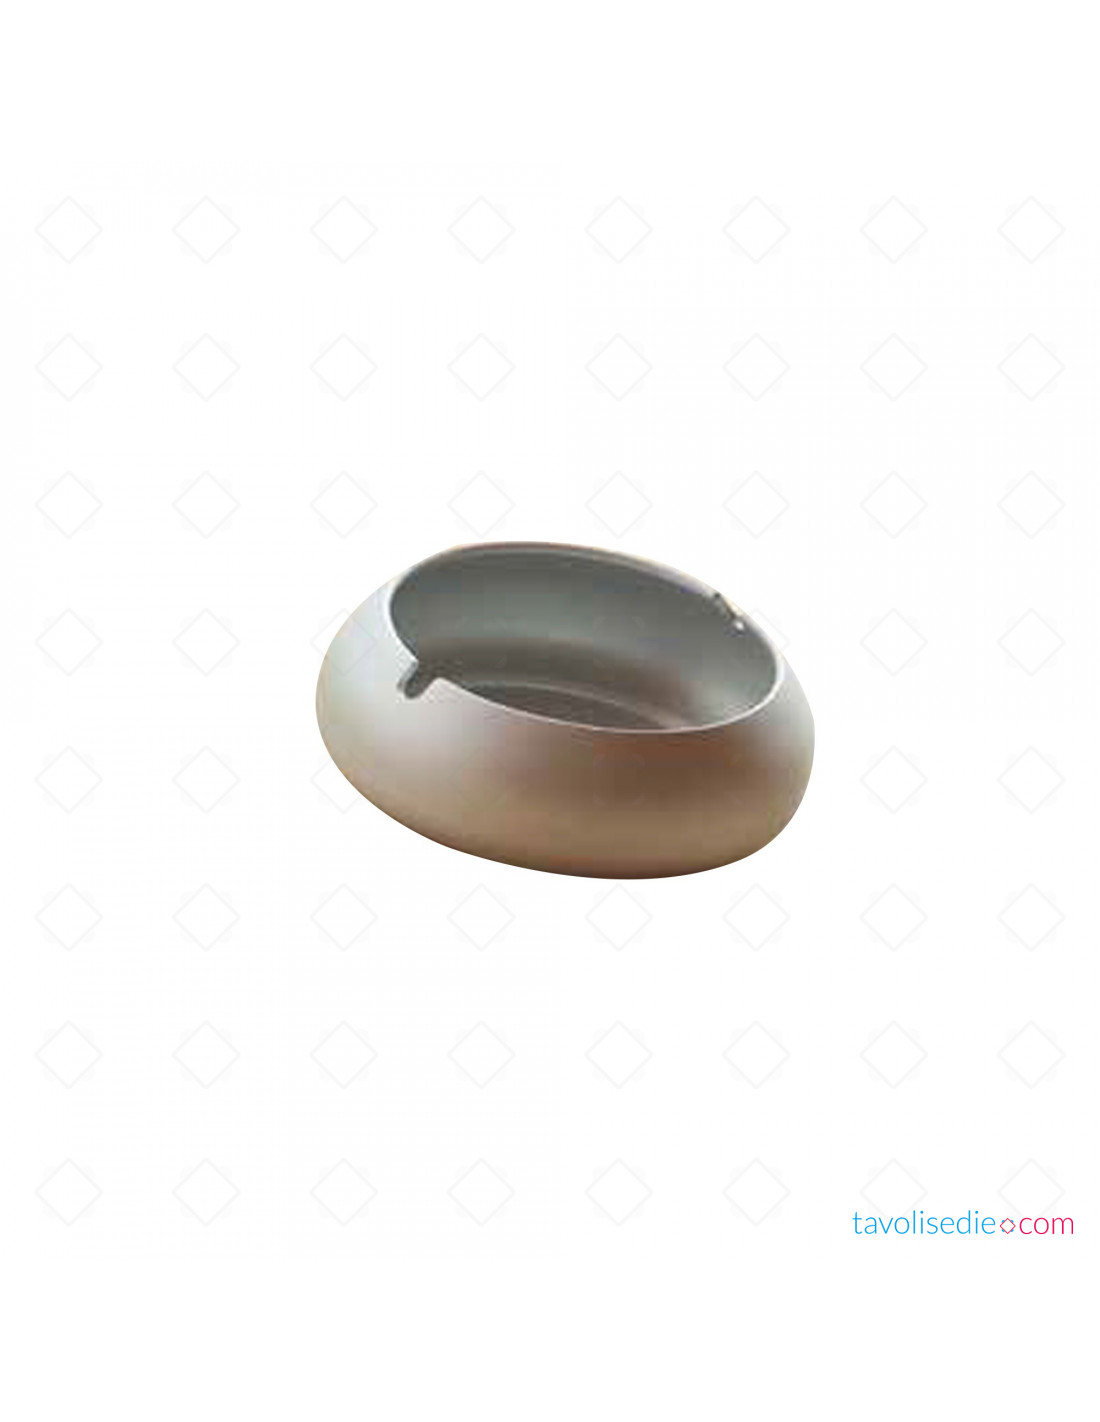 Cenicero metálico con tapa ashtray de acero inoxidable / 10841 – Joinet